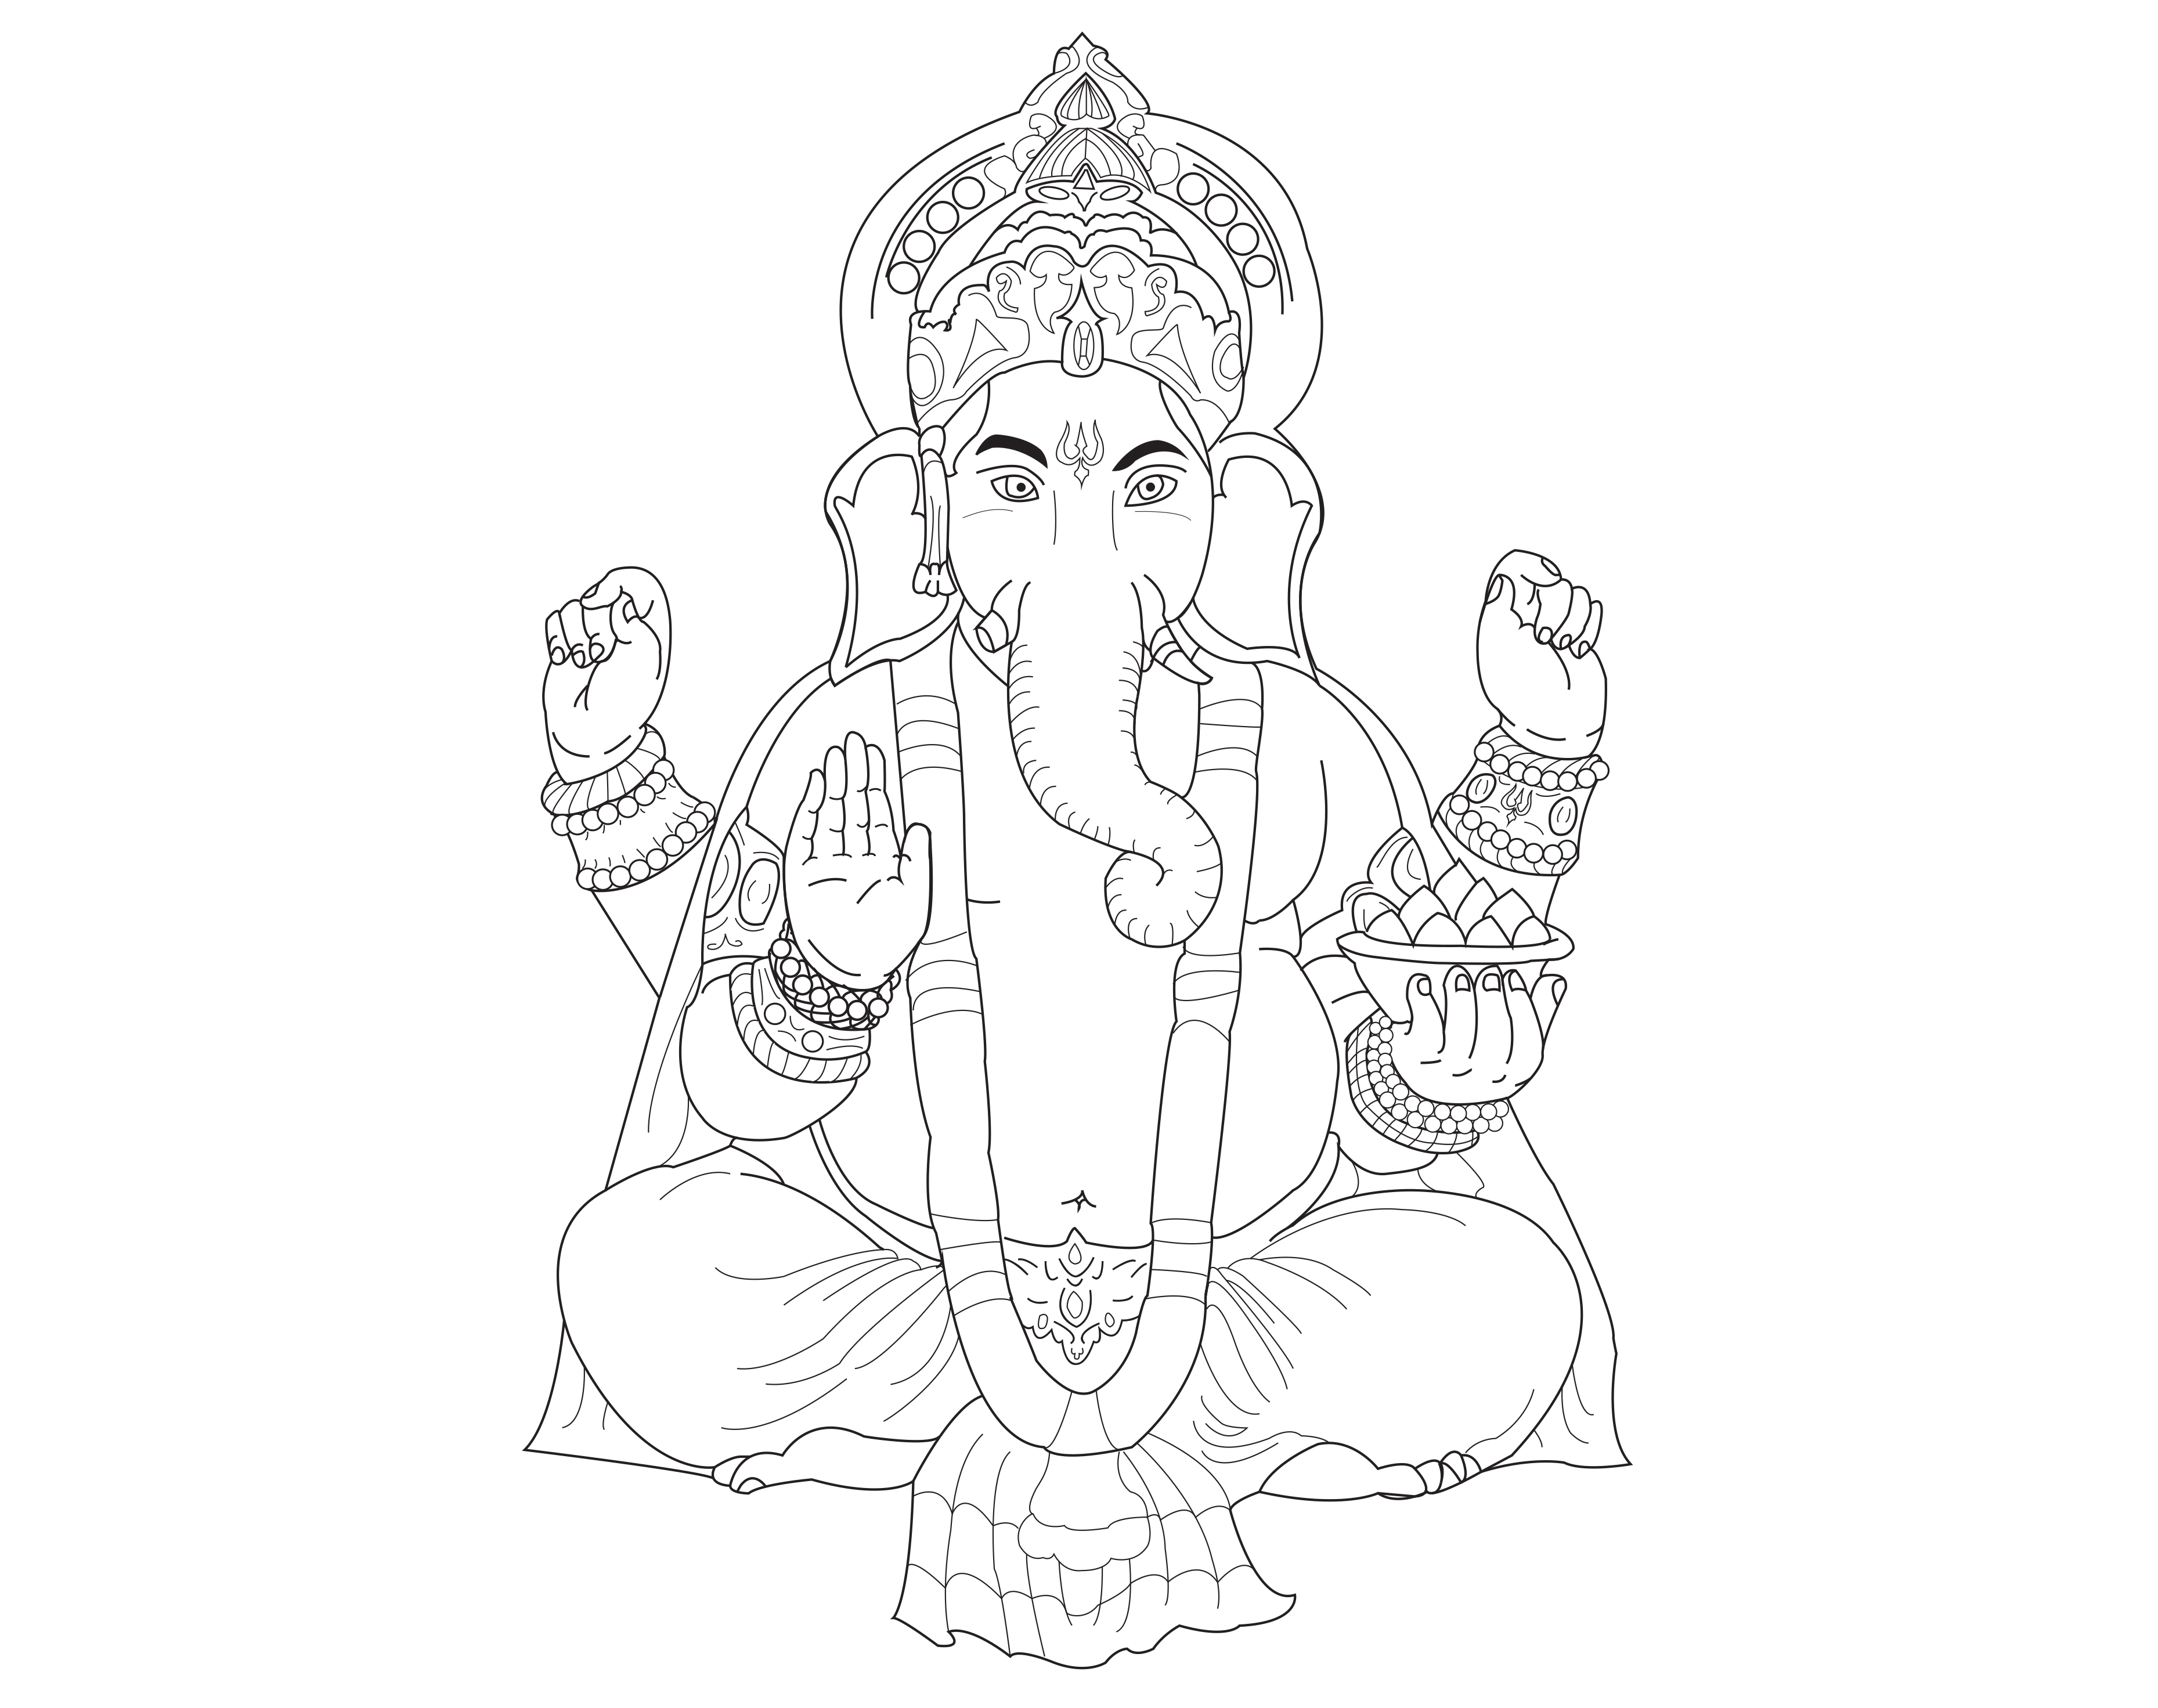 Ganesh, The god of wisdom and intelligence, Artist : Allan